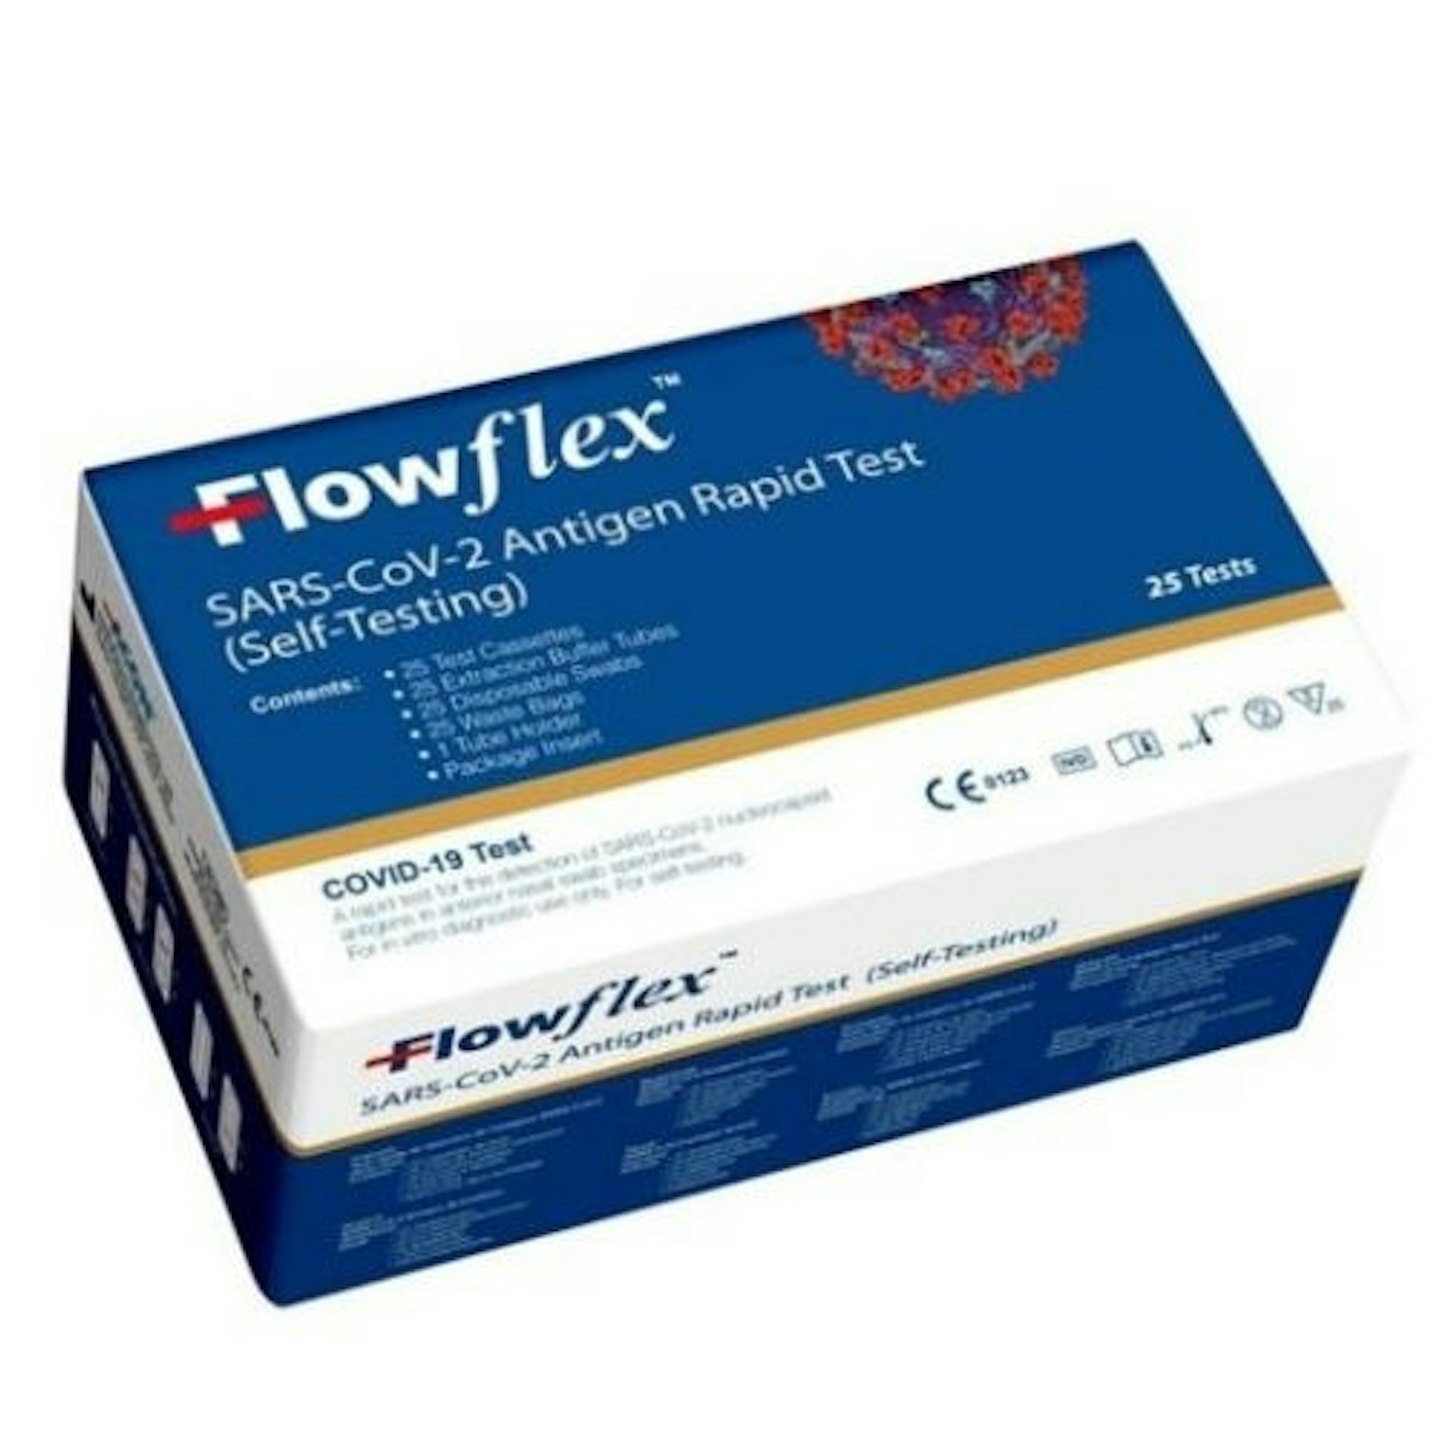 Flowflex Antigen Rapid Test Lateral Flow Self-Testing Kit 25 Pack